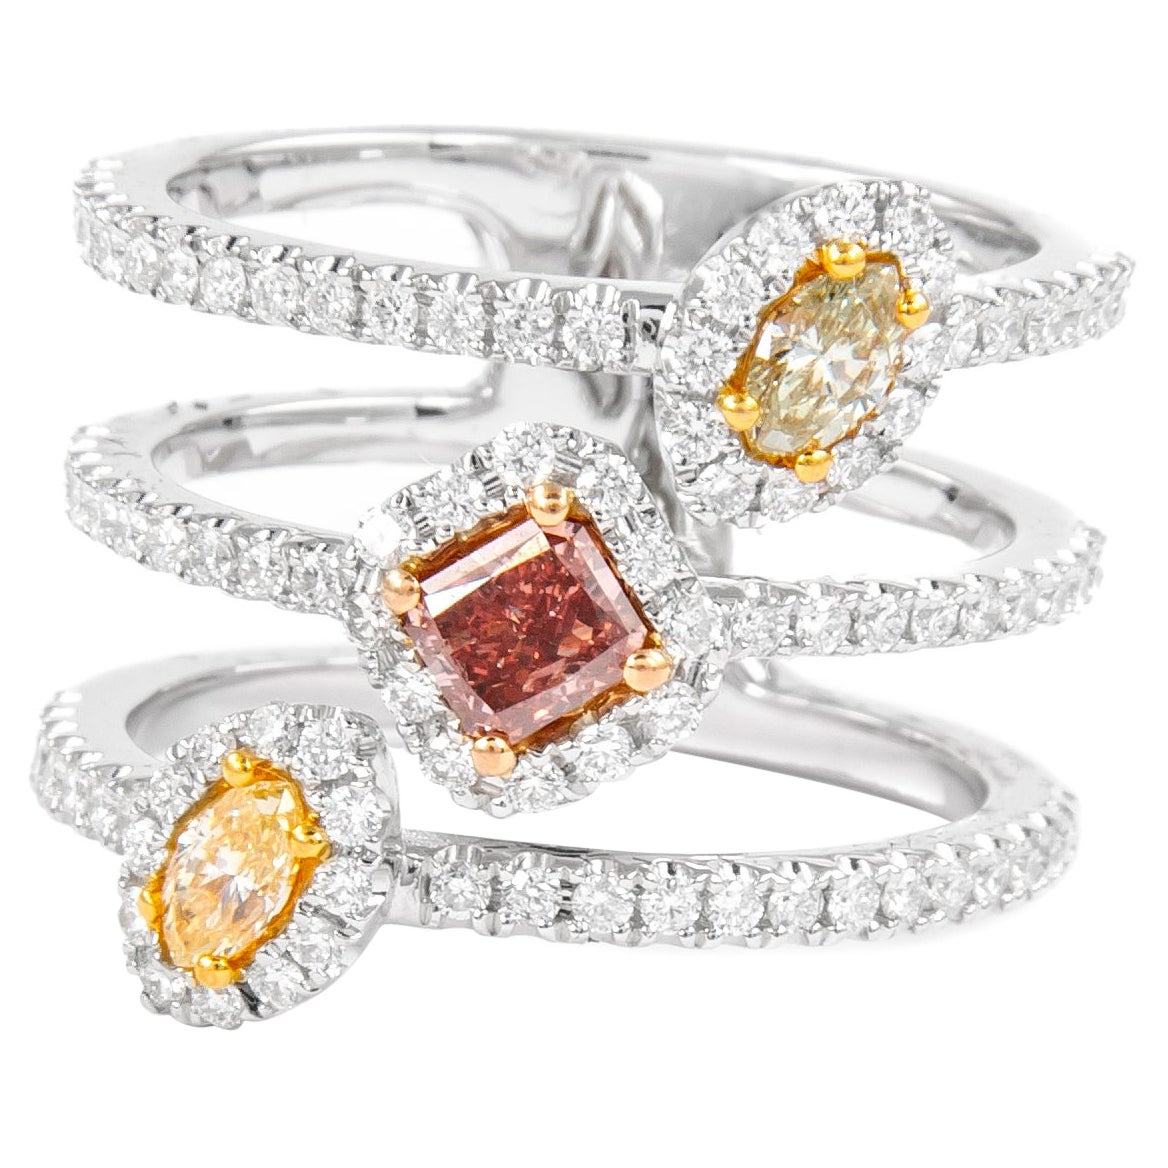 Alexander GIA Certified 1.30ctt Fancy Deep Orangey Pink Diamond Ring 18k